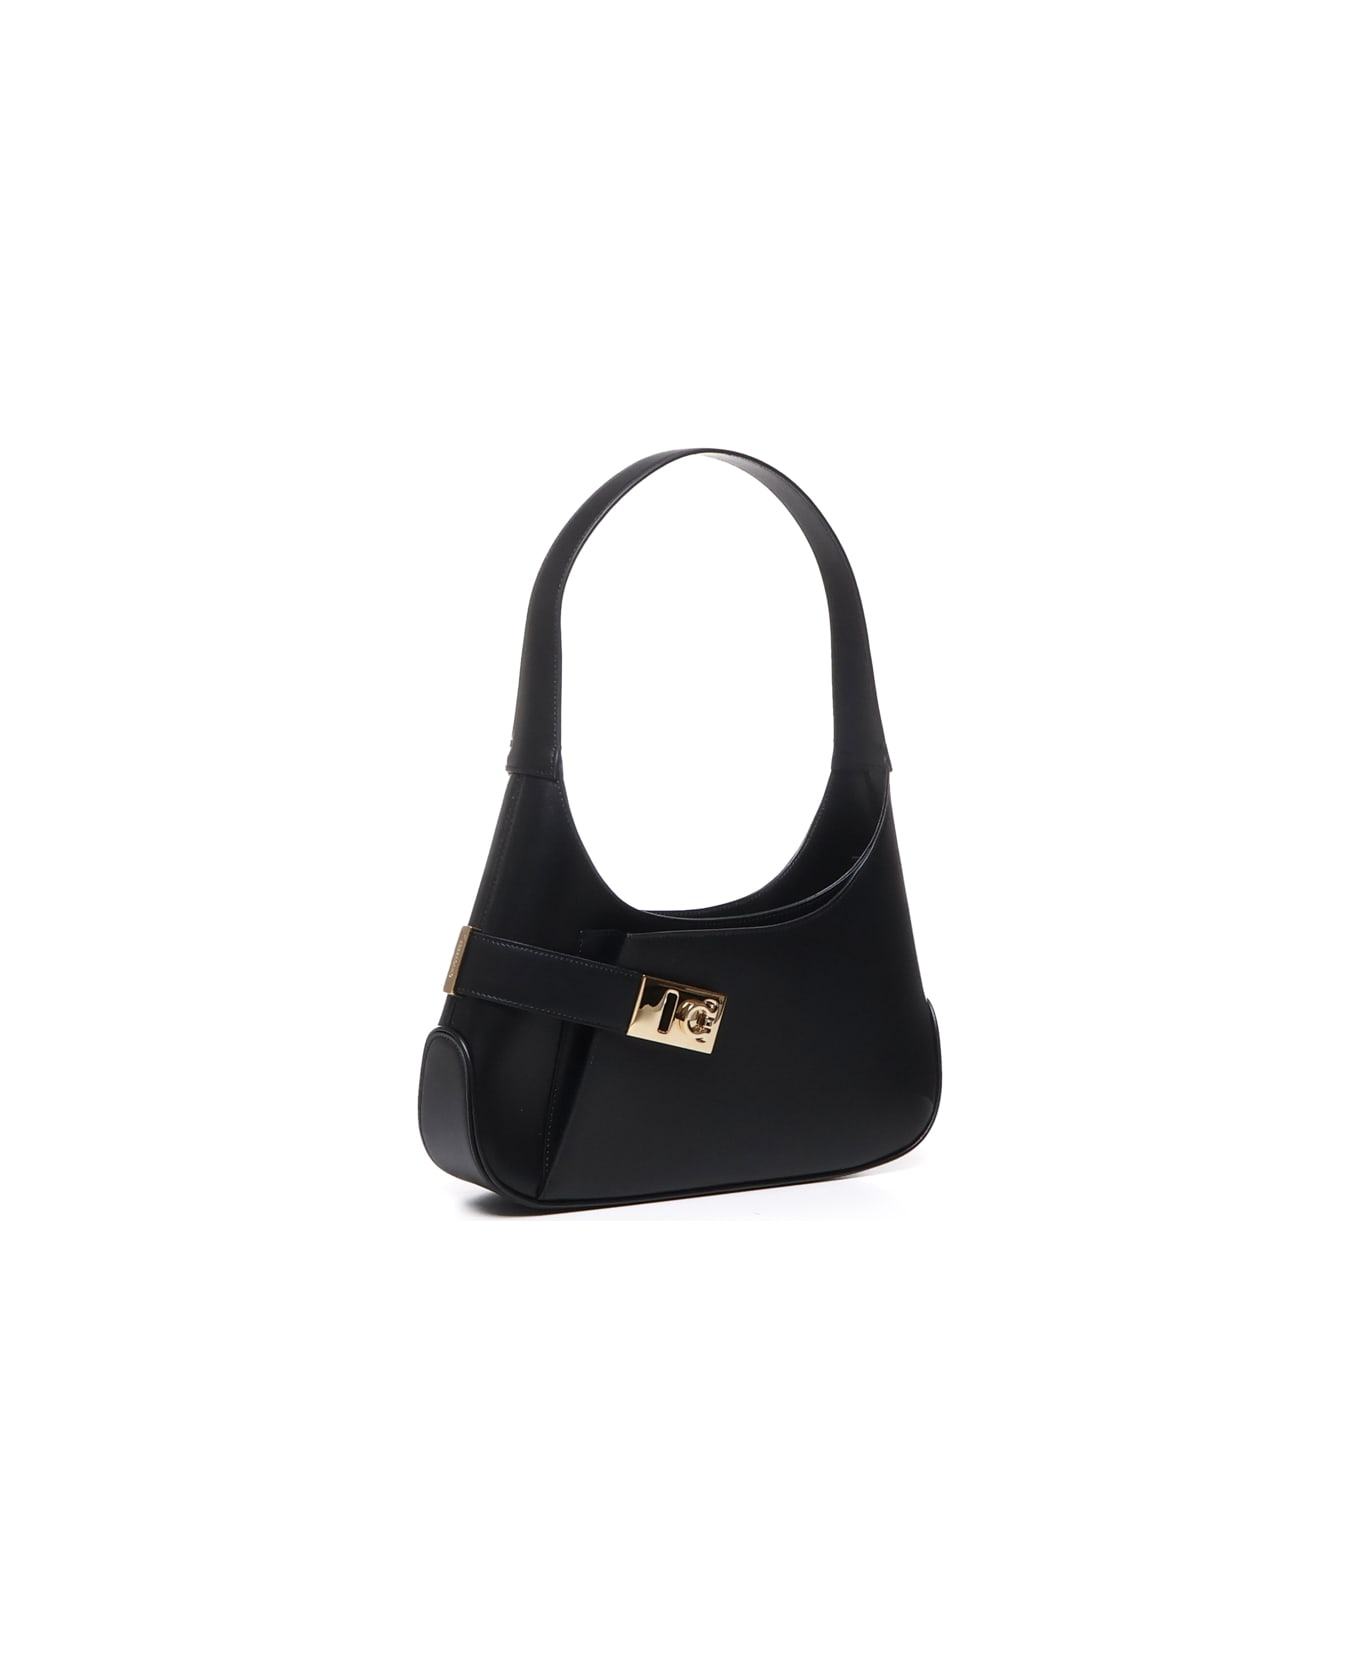 Ferragamo Medium Leather Shoulder Bag - Black